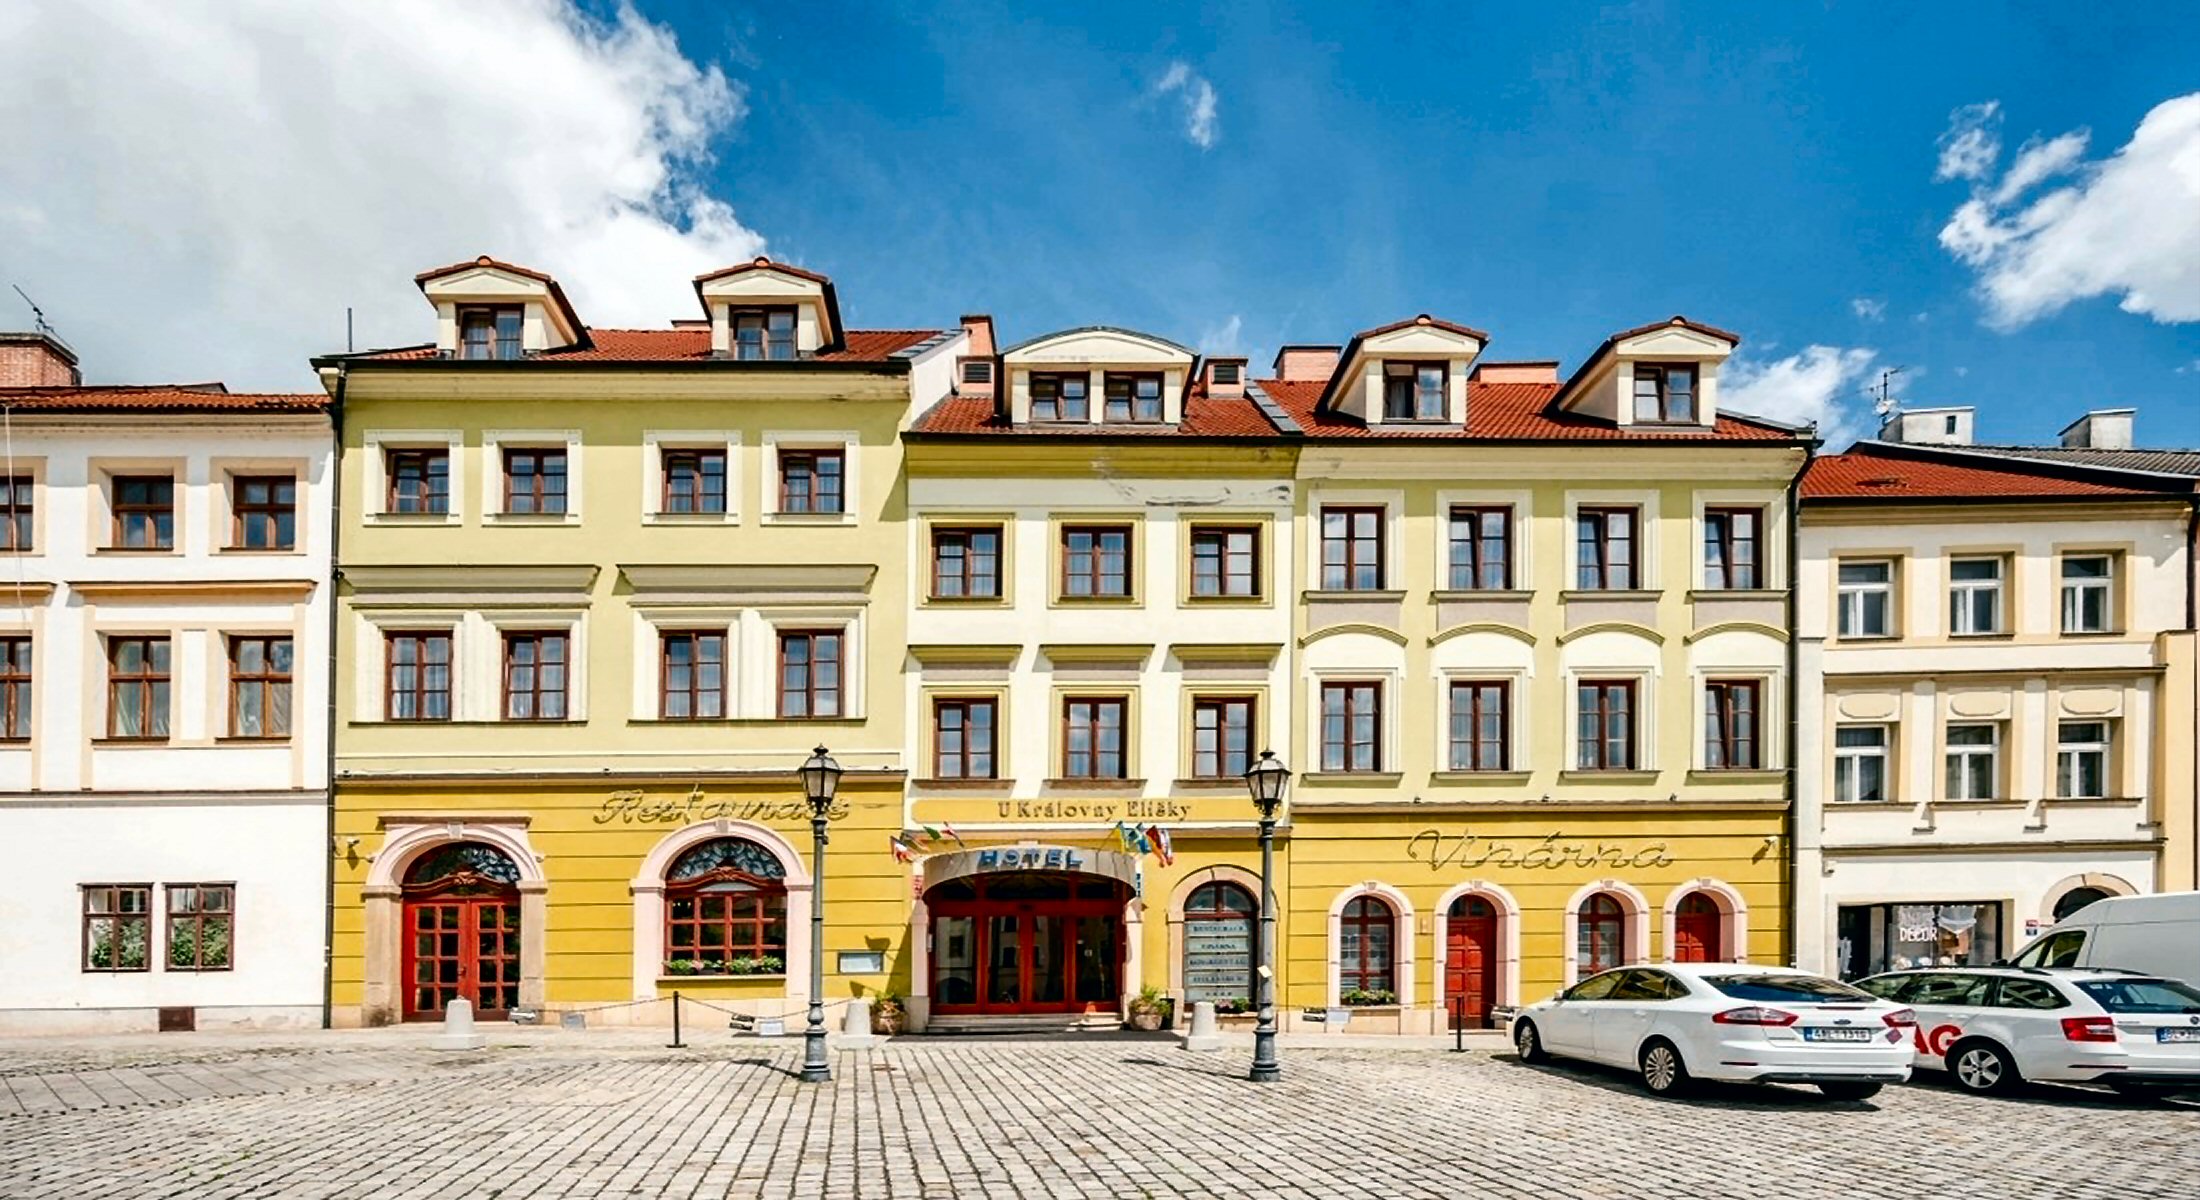 Hotel U Kralovny Elisky photo 1 - full size